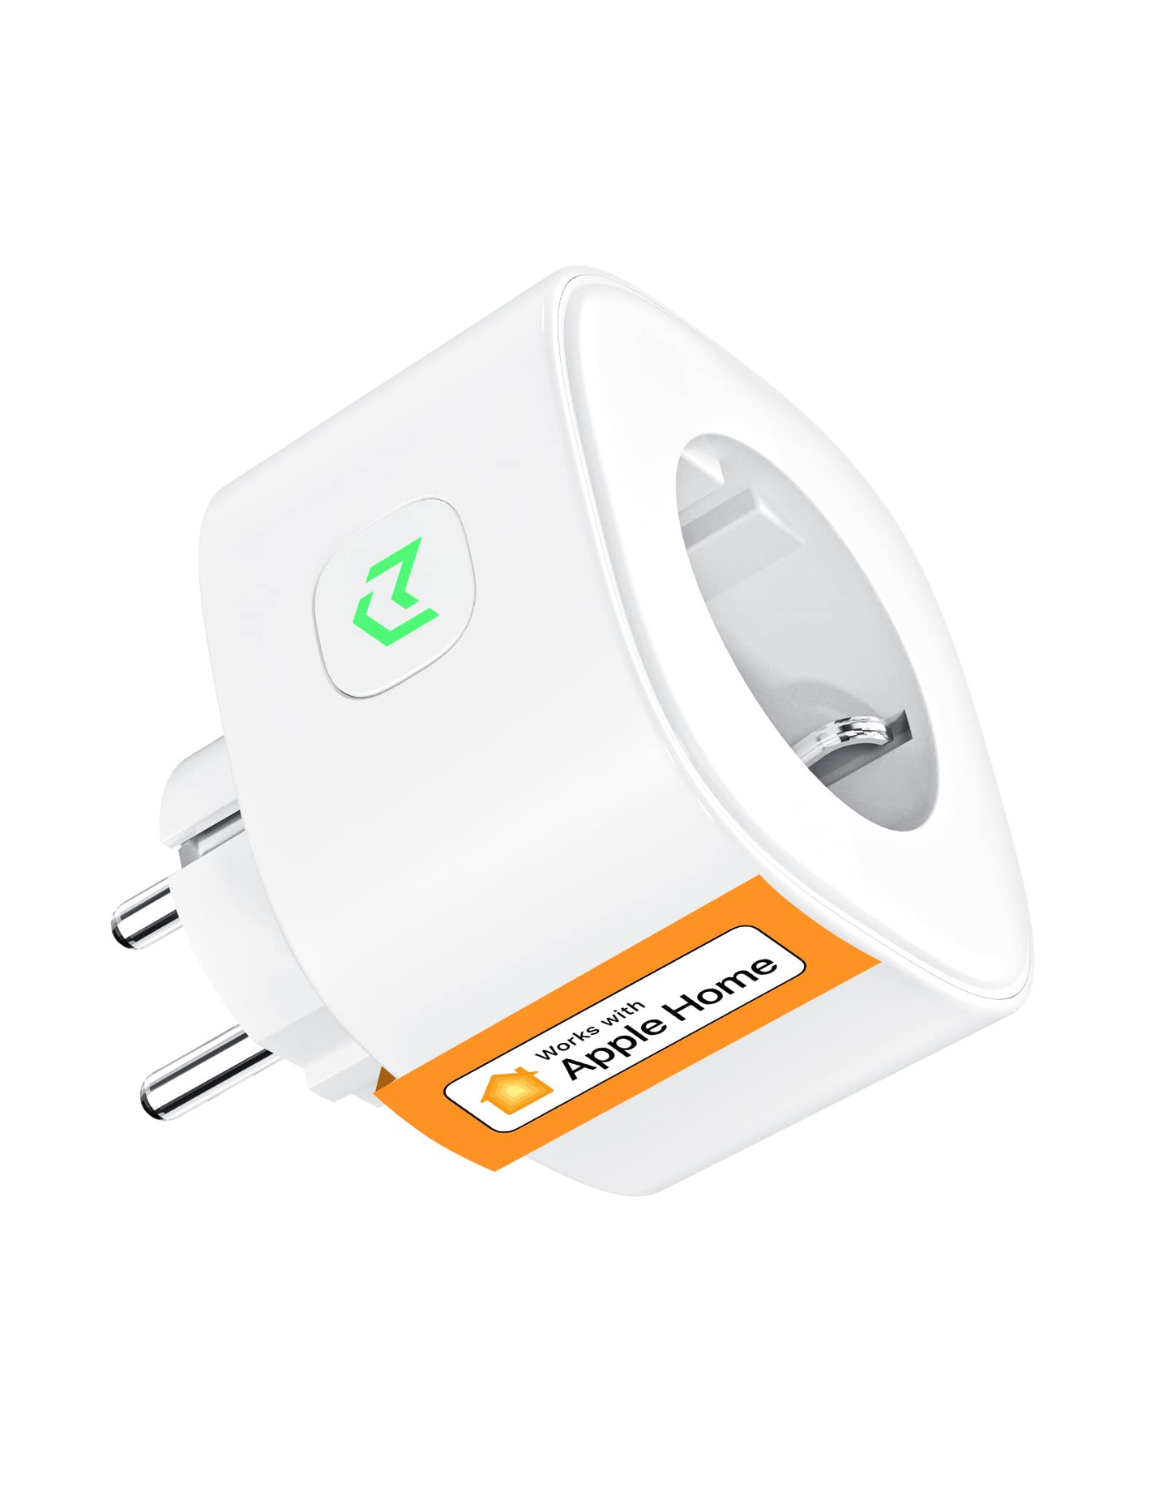 WiFi Smart Plug Timer Outlet for US Household 100-240V Energy Control